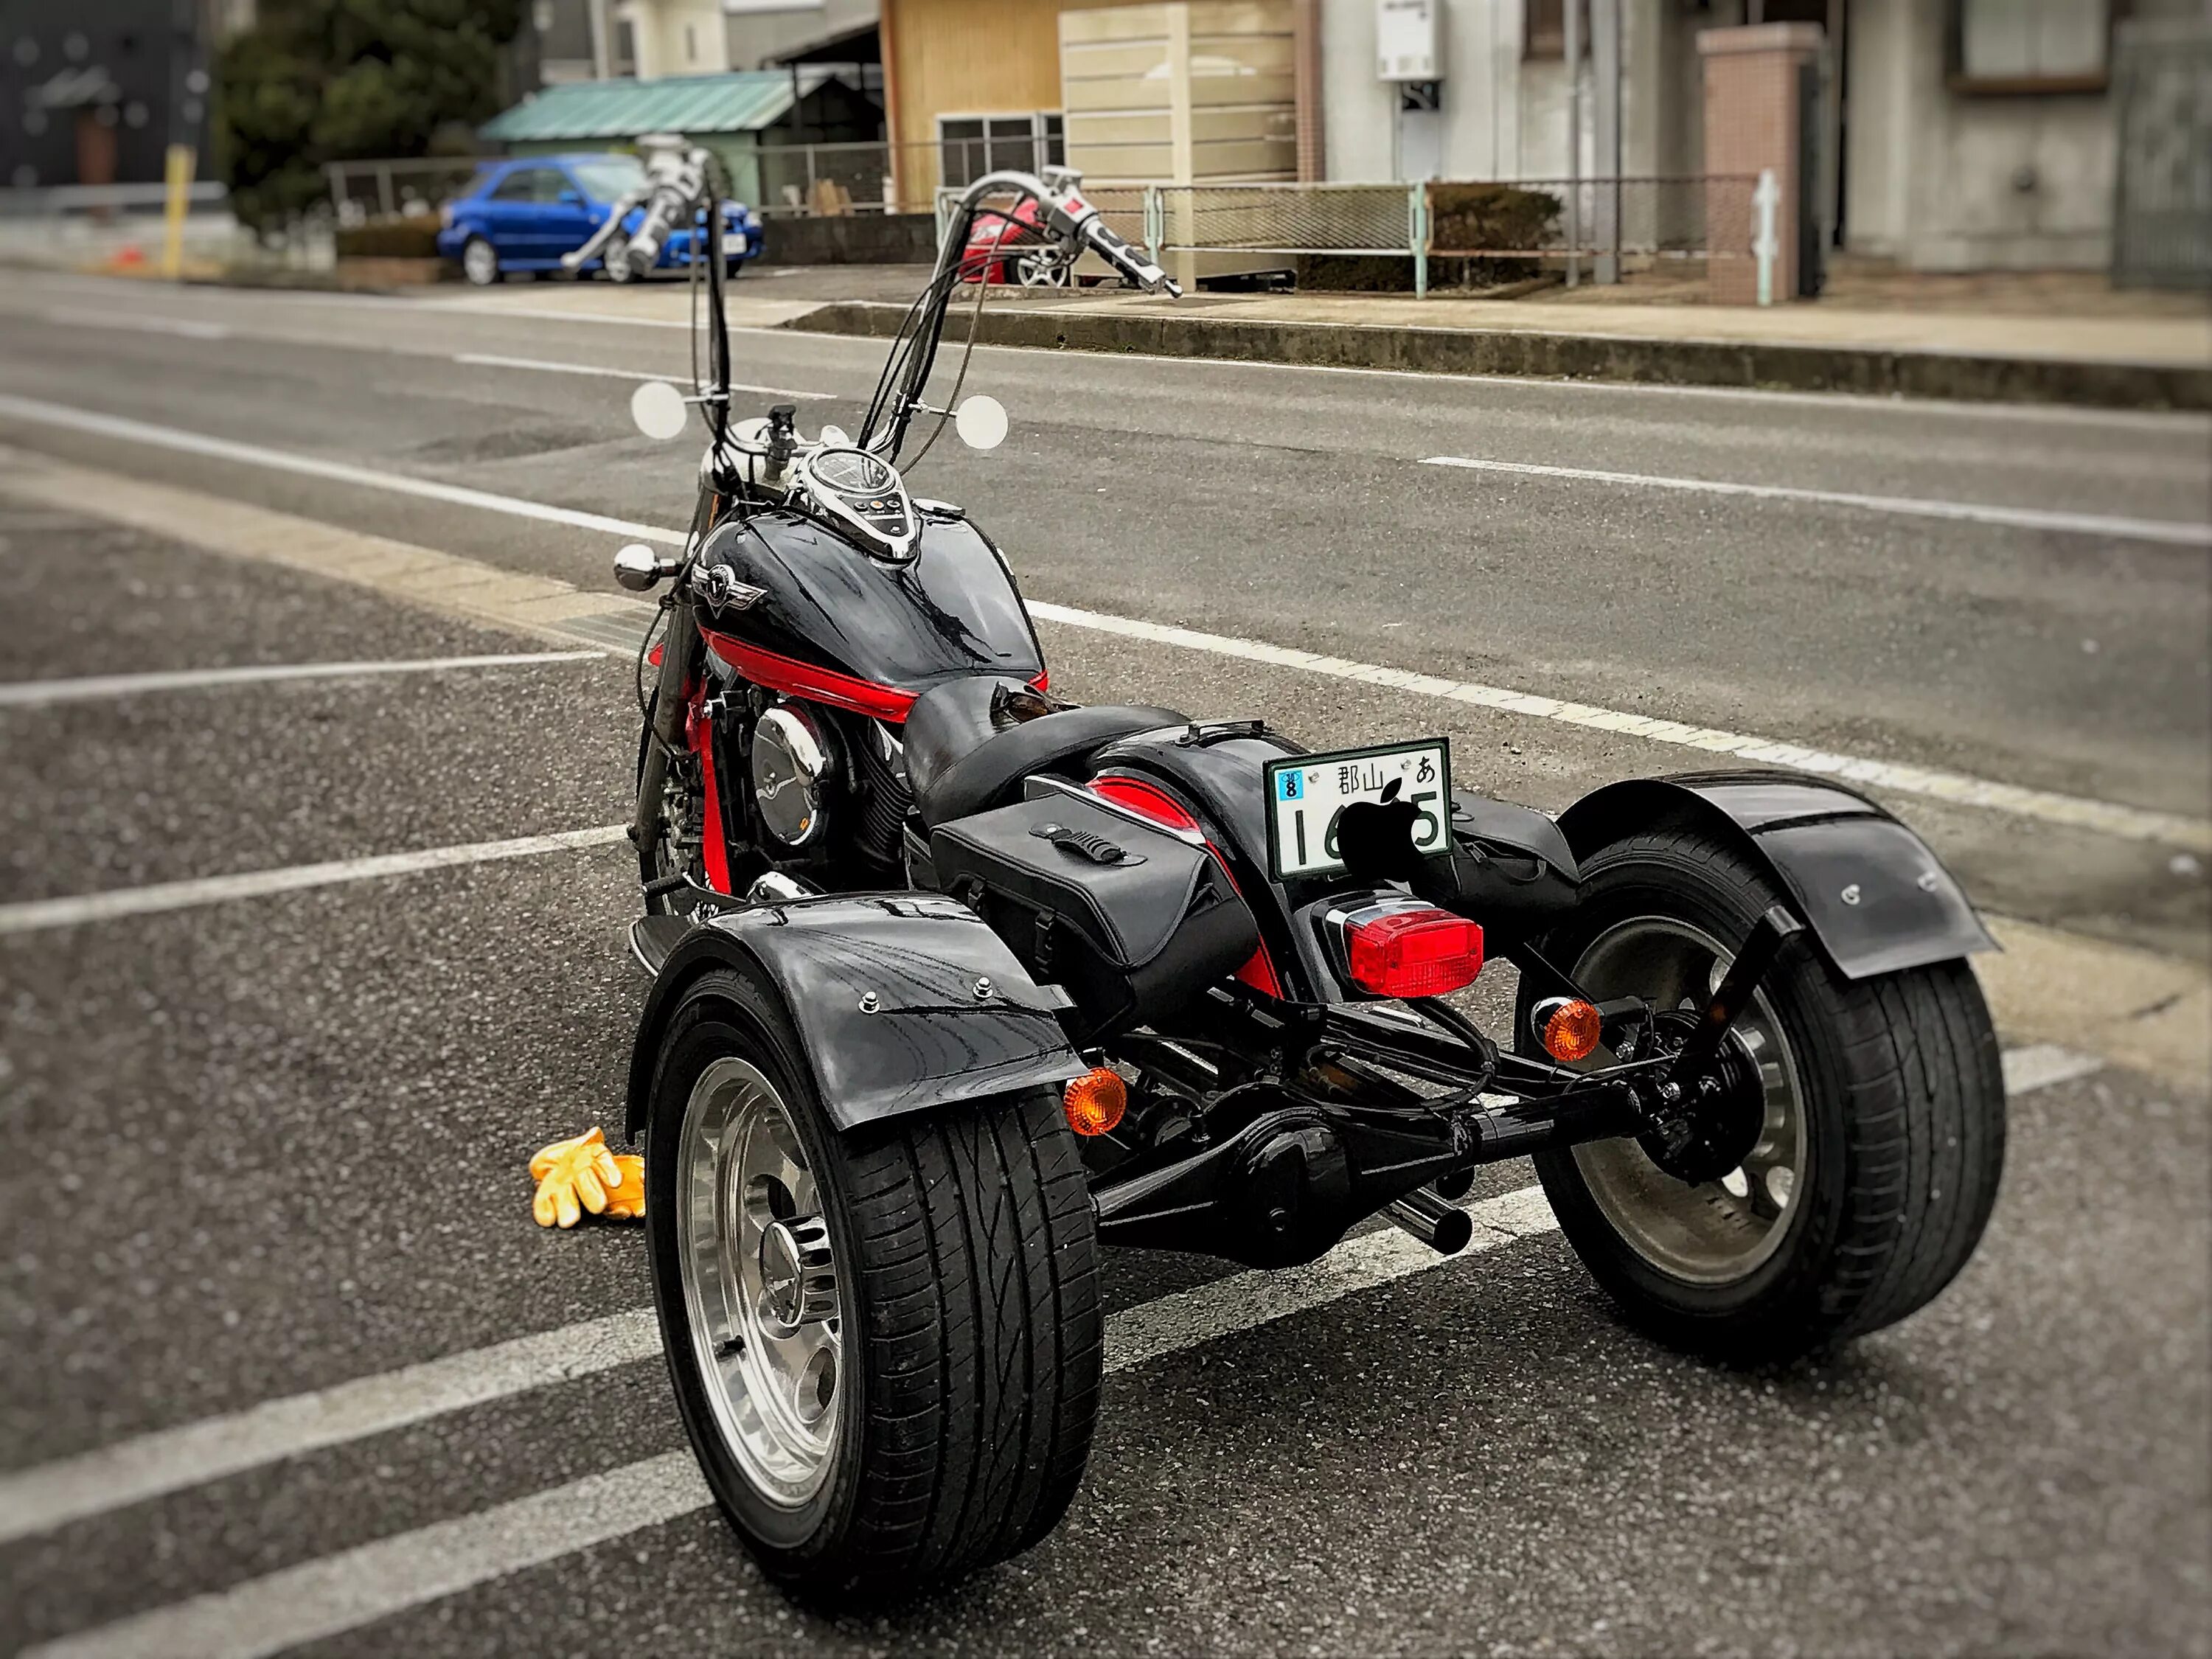 Купить на 3 мотоцикл. Трайк Trike. Valkyrie Honda 1500 Trike. Атаман трайк. Трёхколёсный трайк.